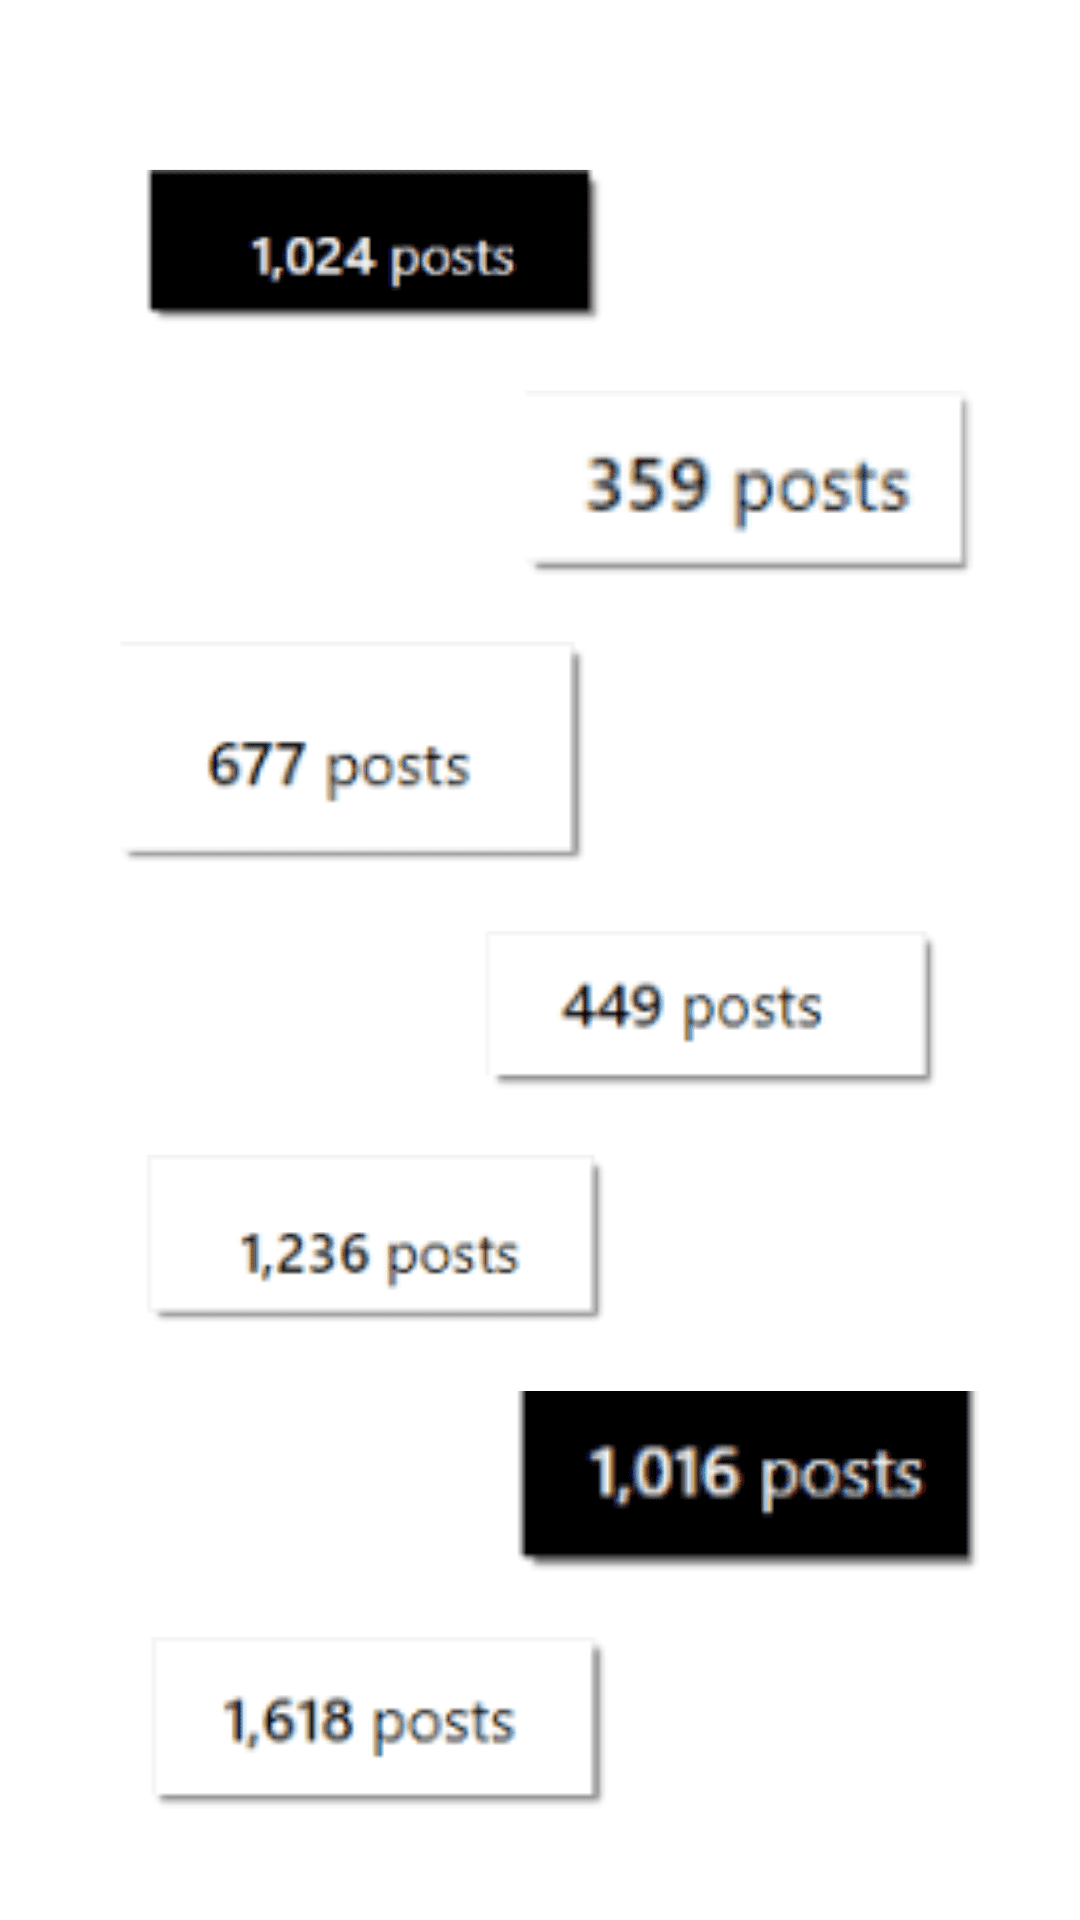 too many posts